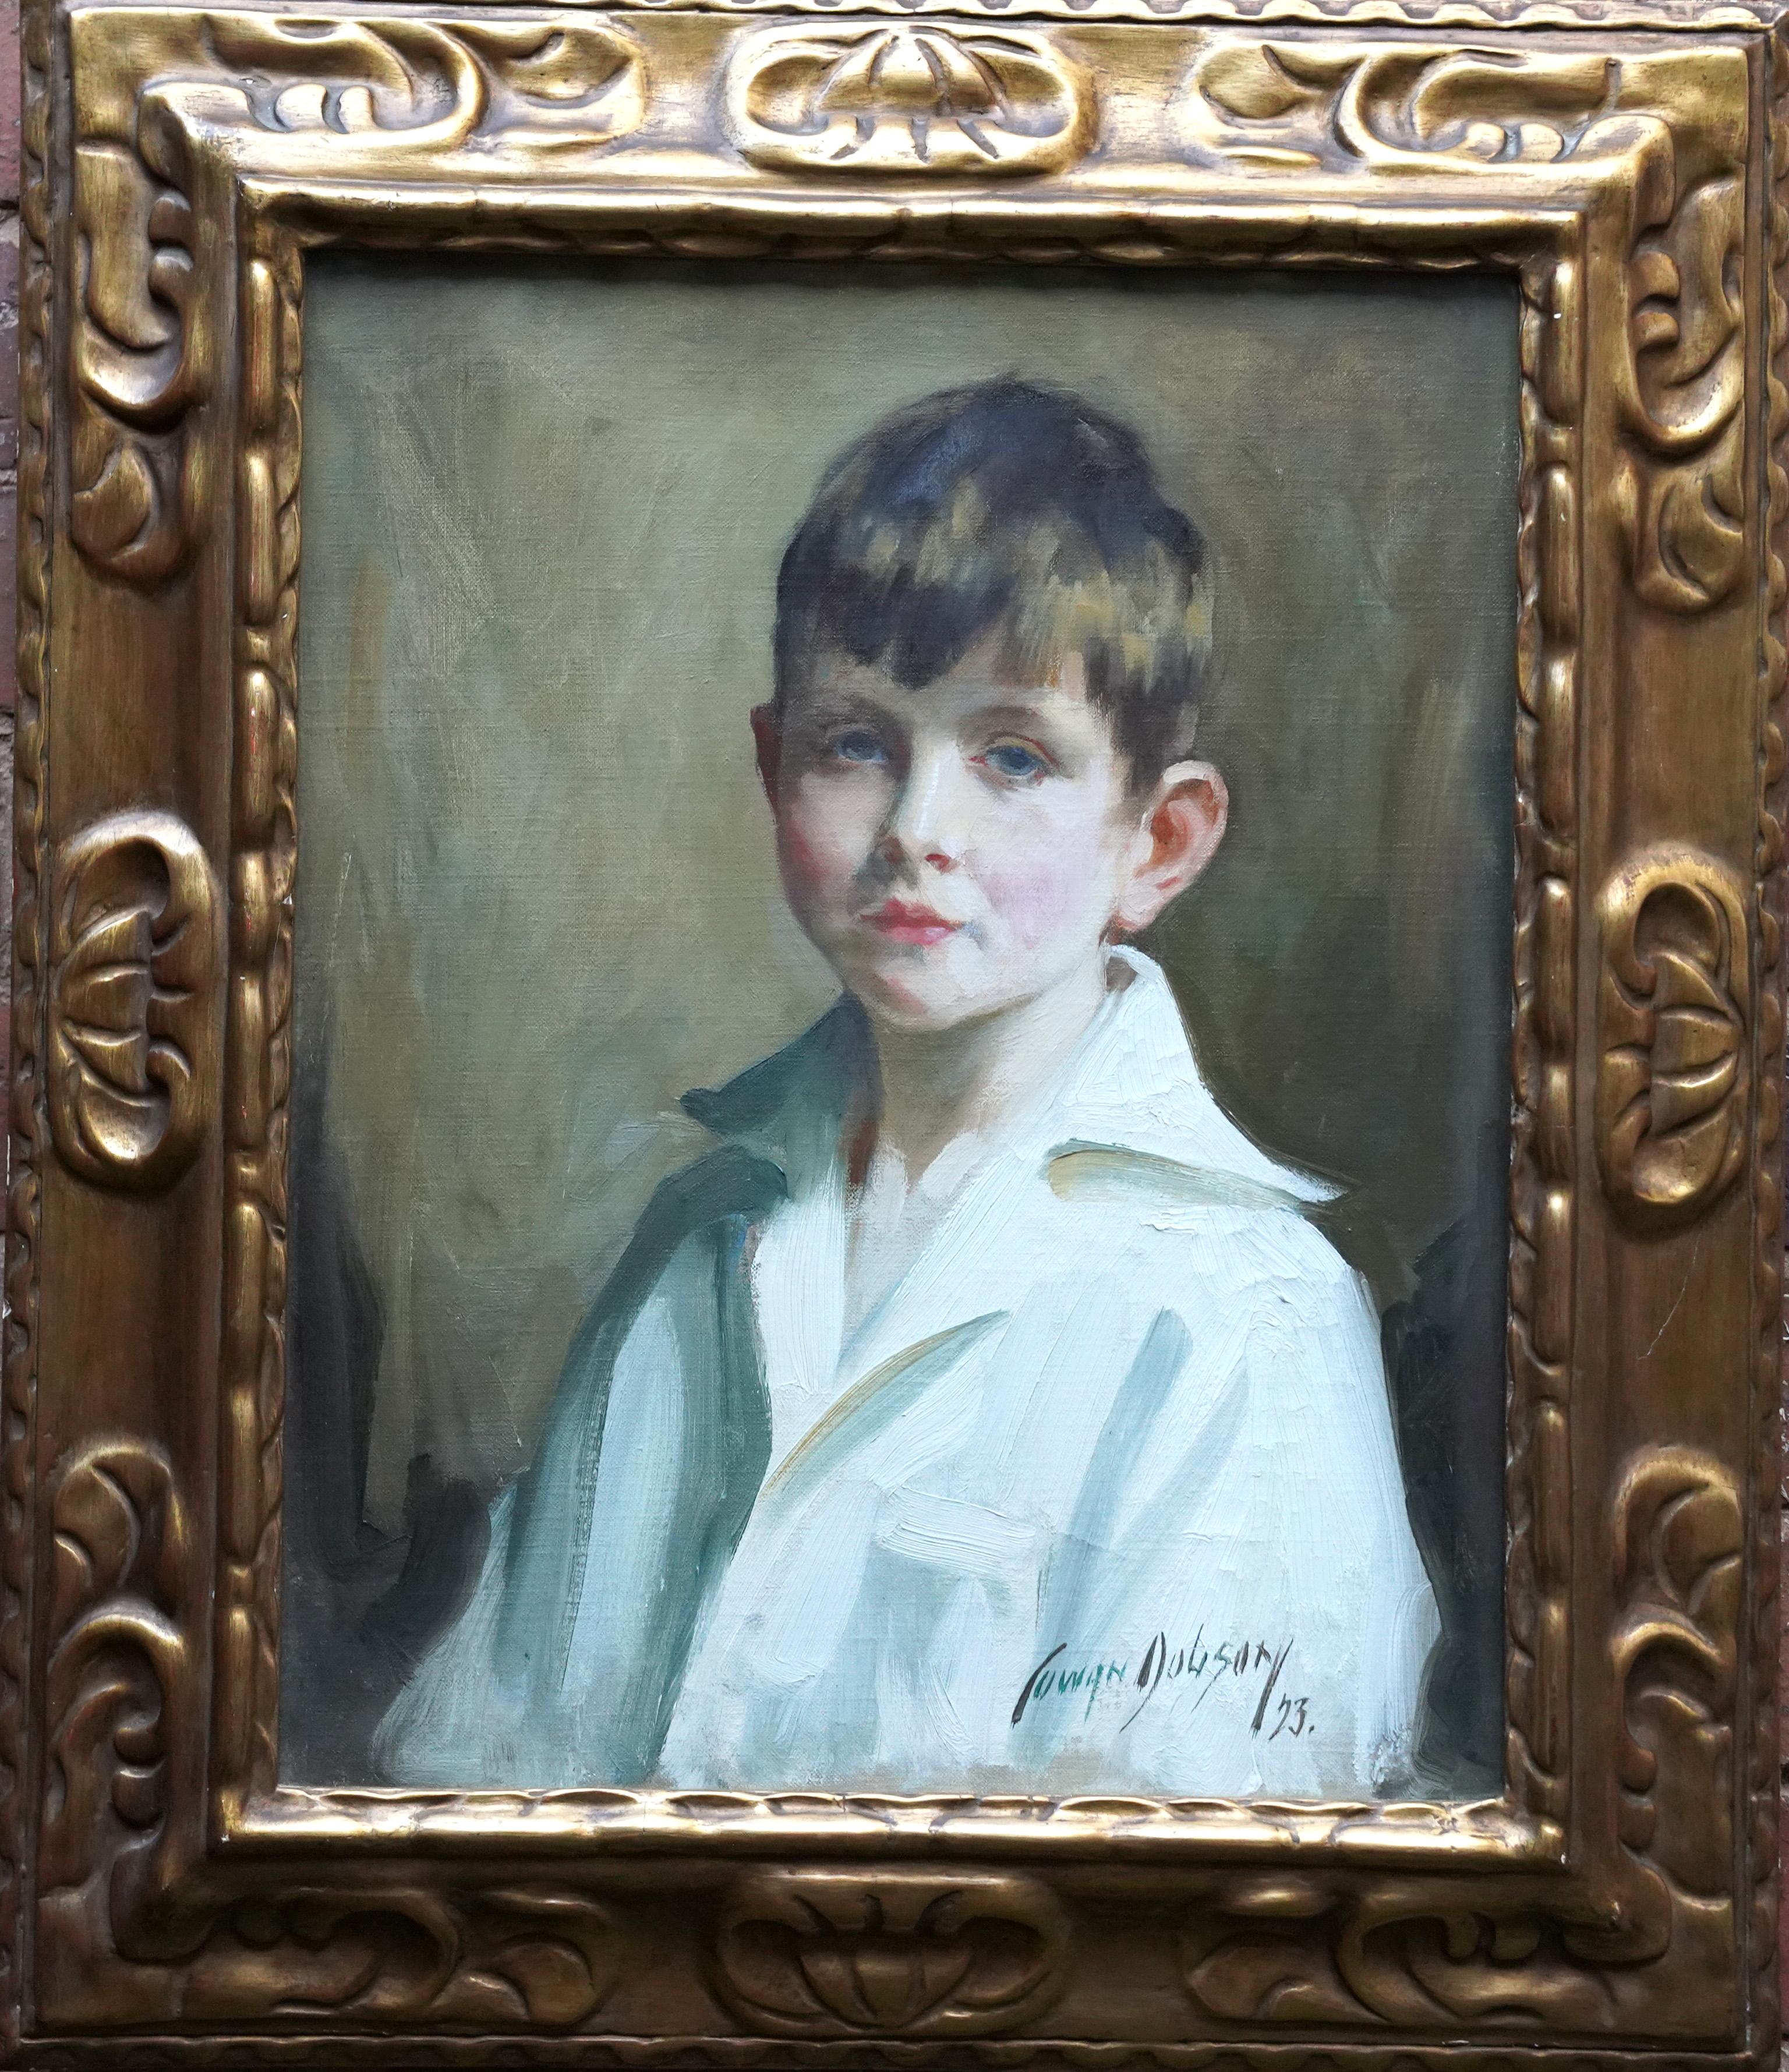 David Cowan Dobson Portrait Painting - Portrait of a Boy in White Shirt - Scottish 1920's Art Deco male oil painting